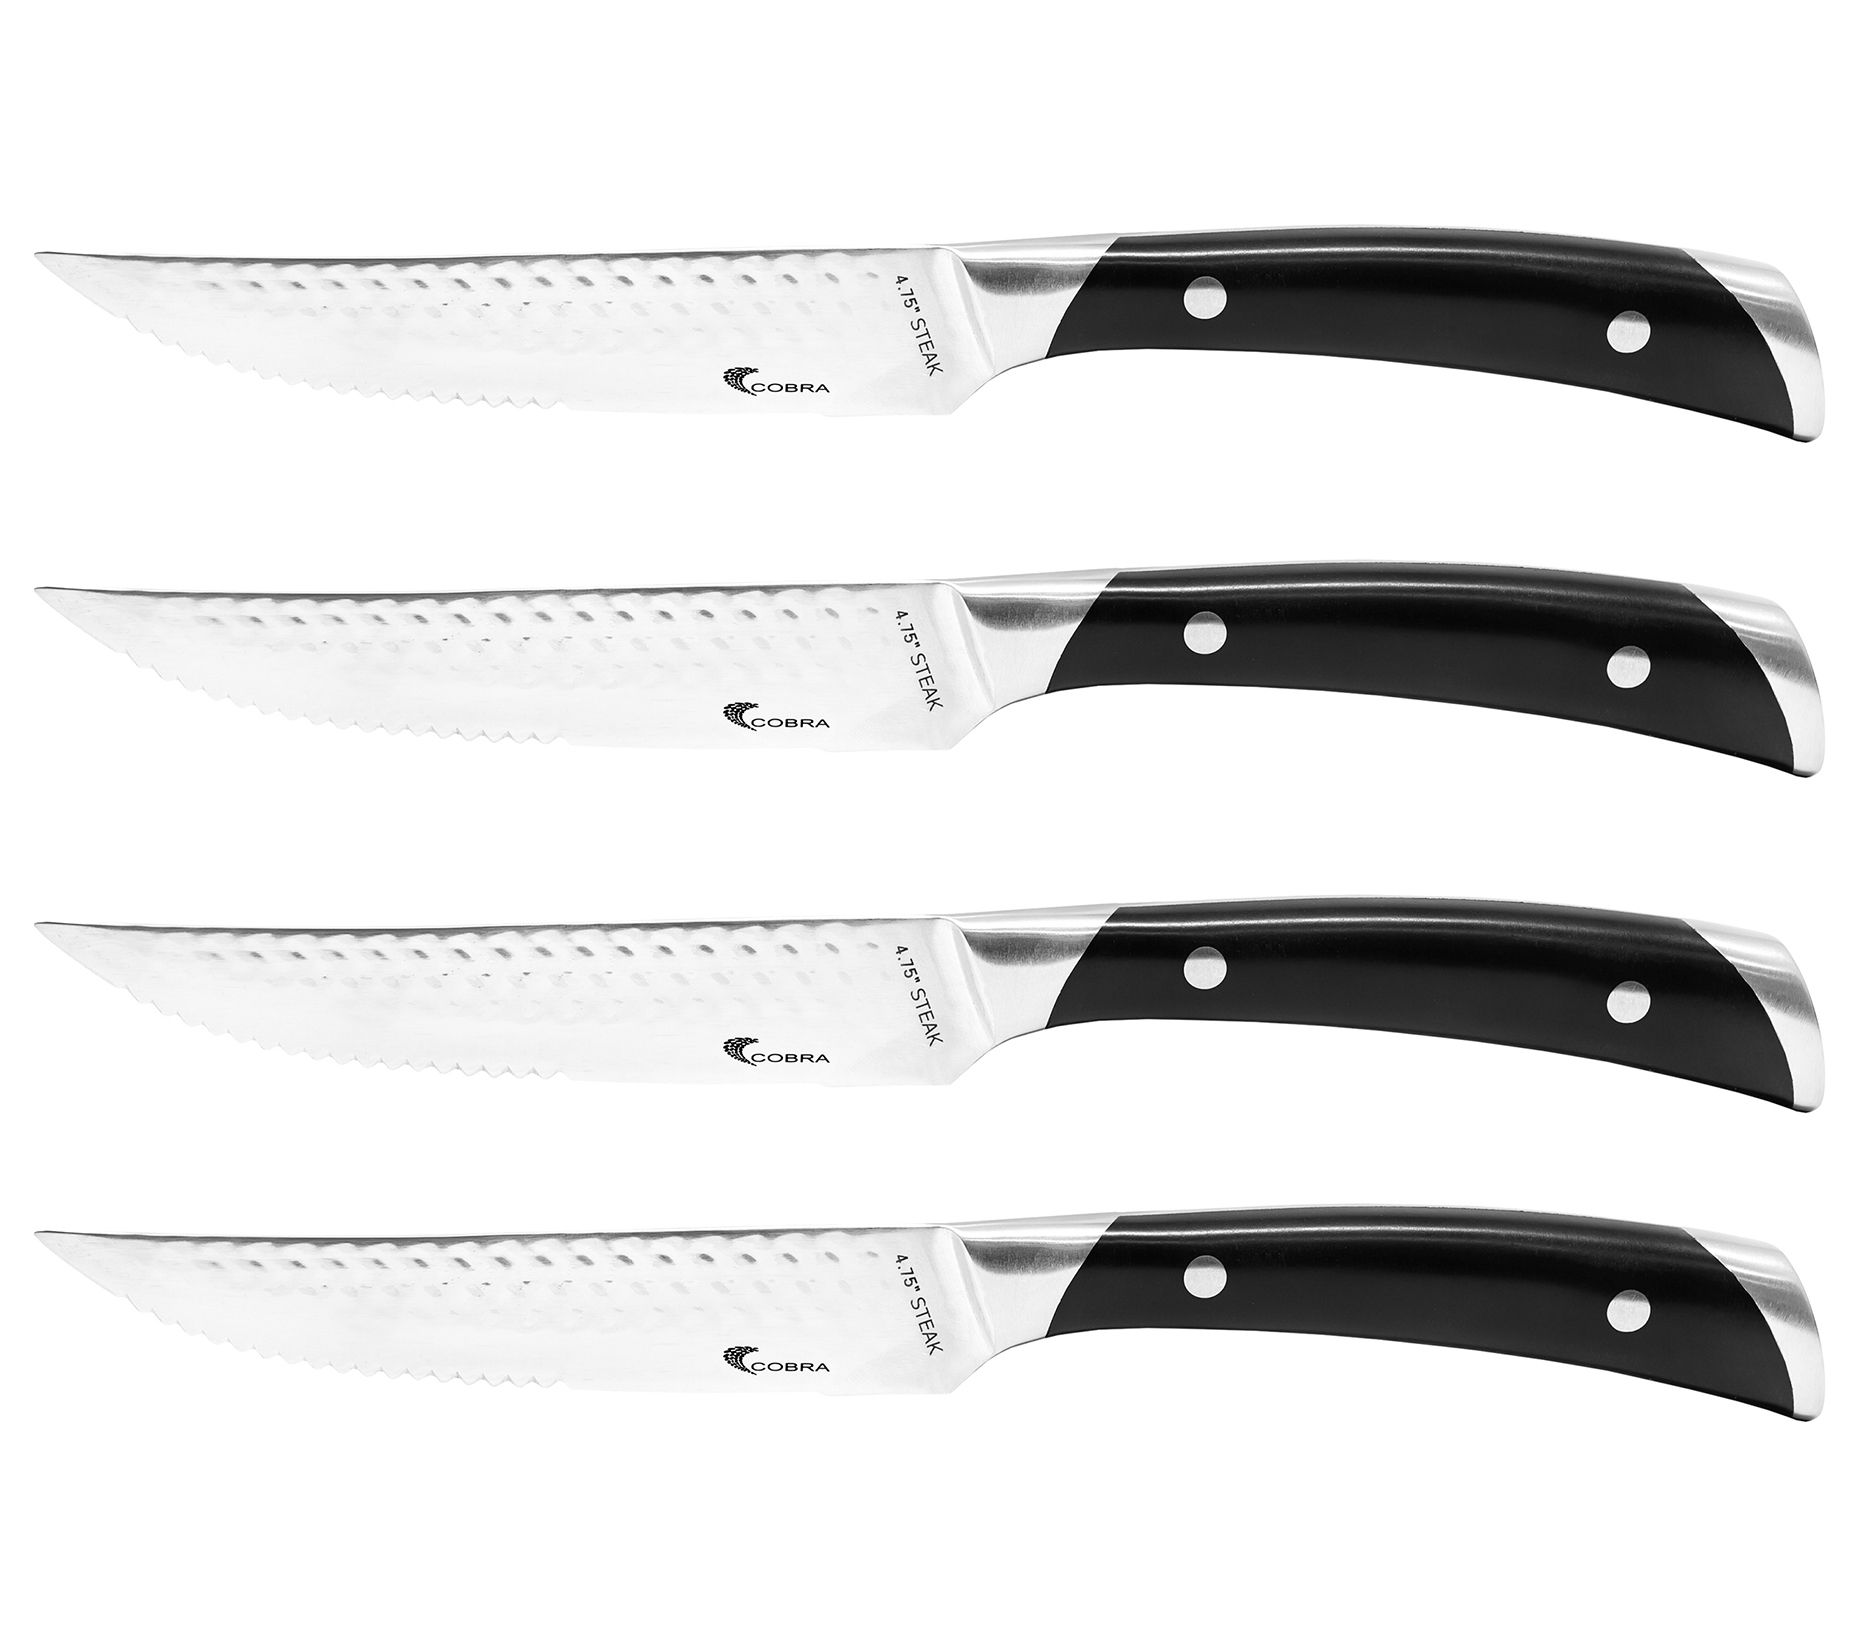 JoyJolt 4-Piece Steak Knife High Carbon Steel Kitchen Knives Set